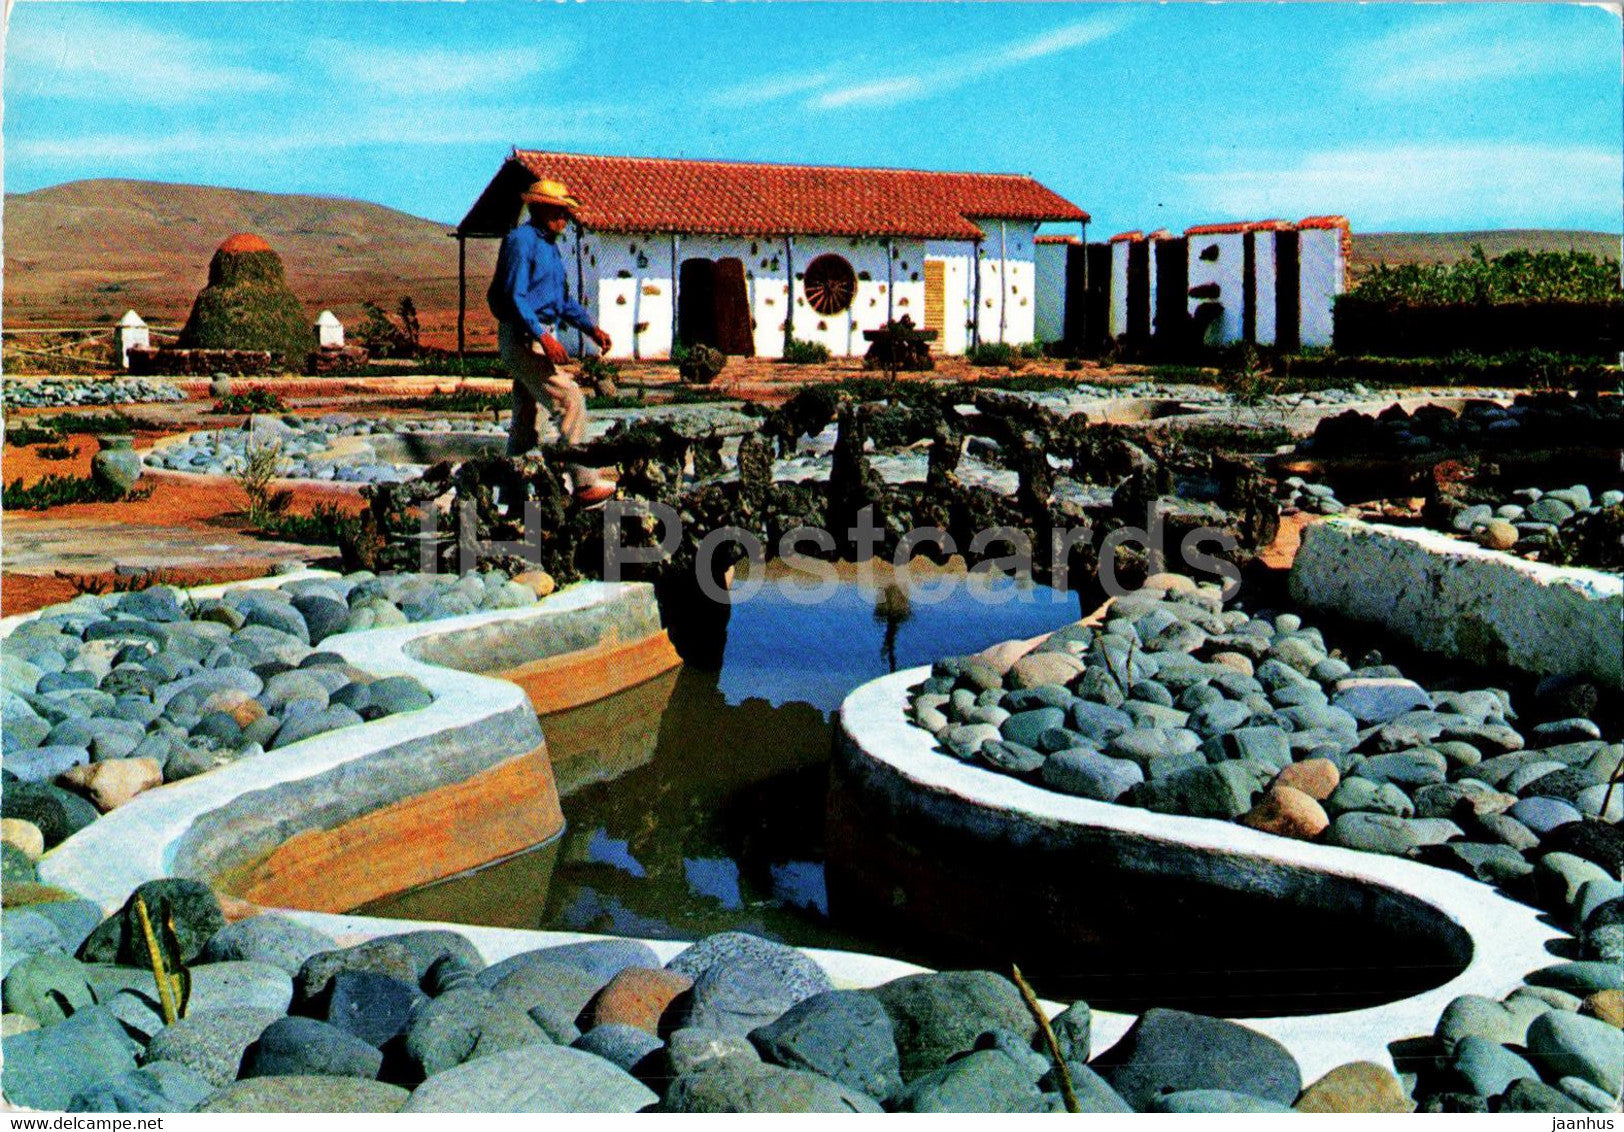 Fuerteventura - Rincon tipico - Typical landscape - 2660 - 1973 - Spain - used - JH Postcards